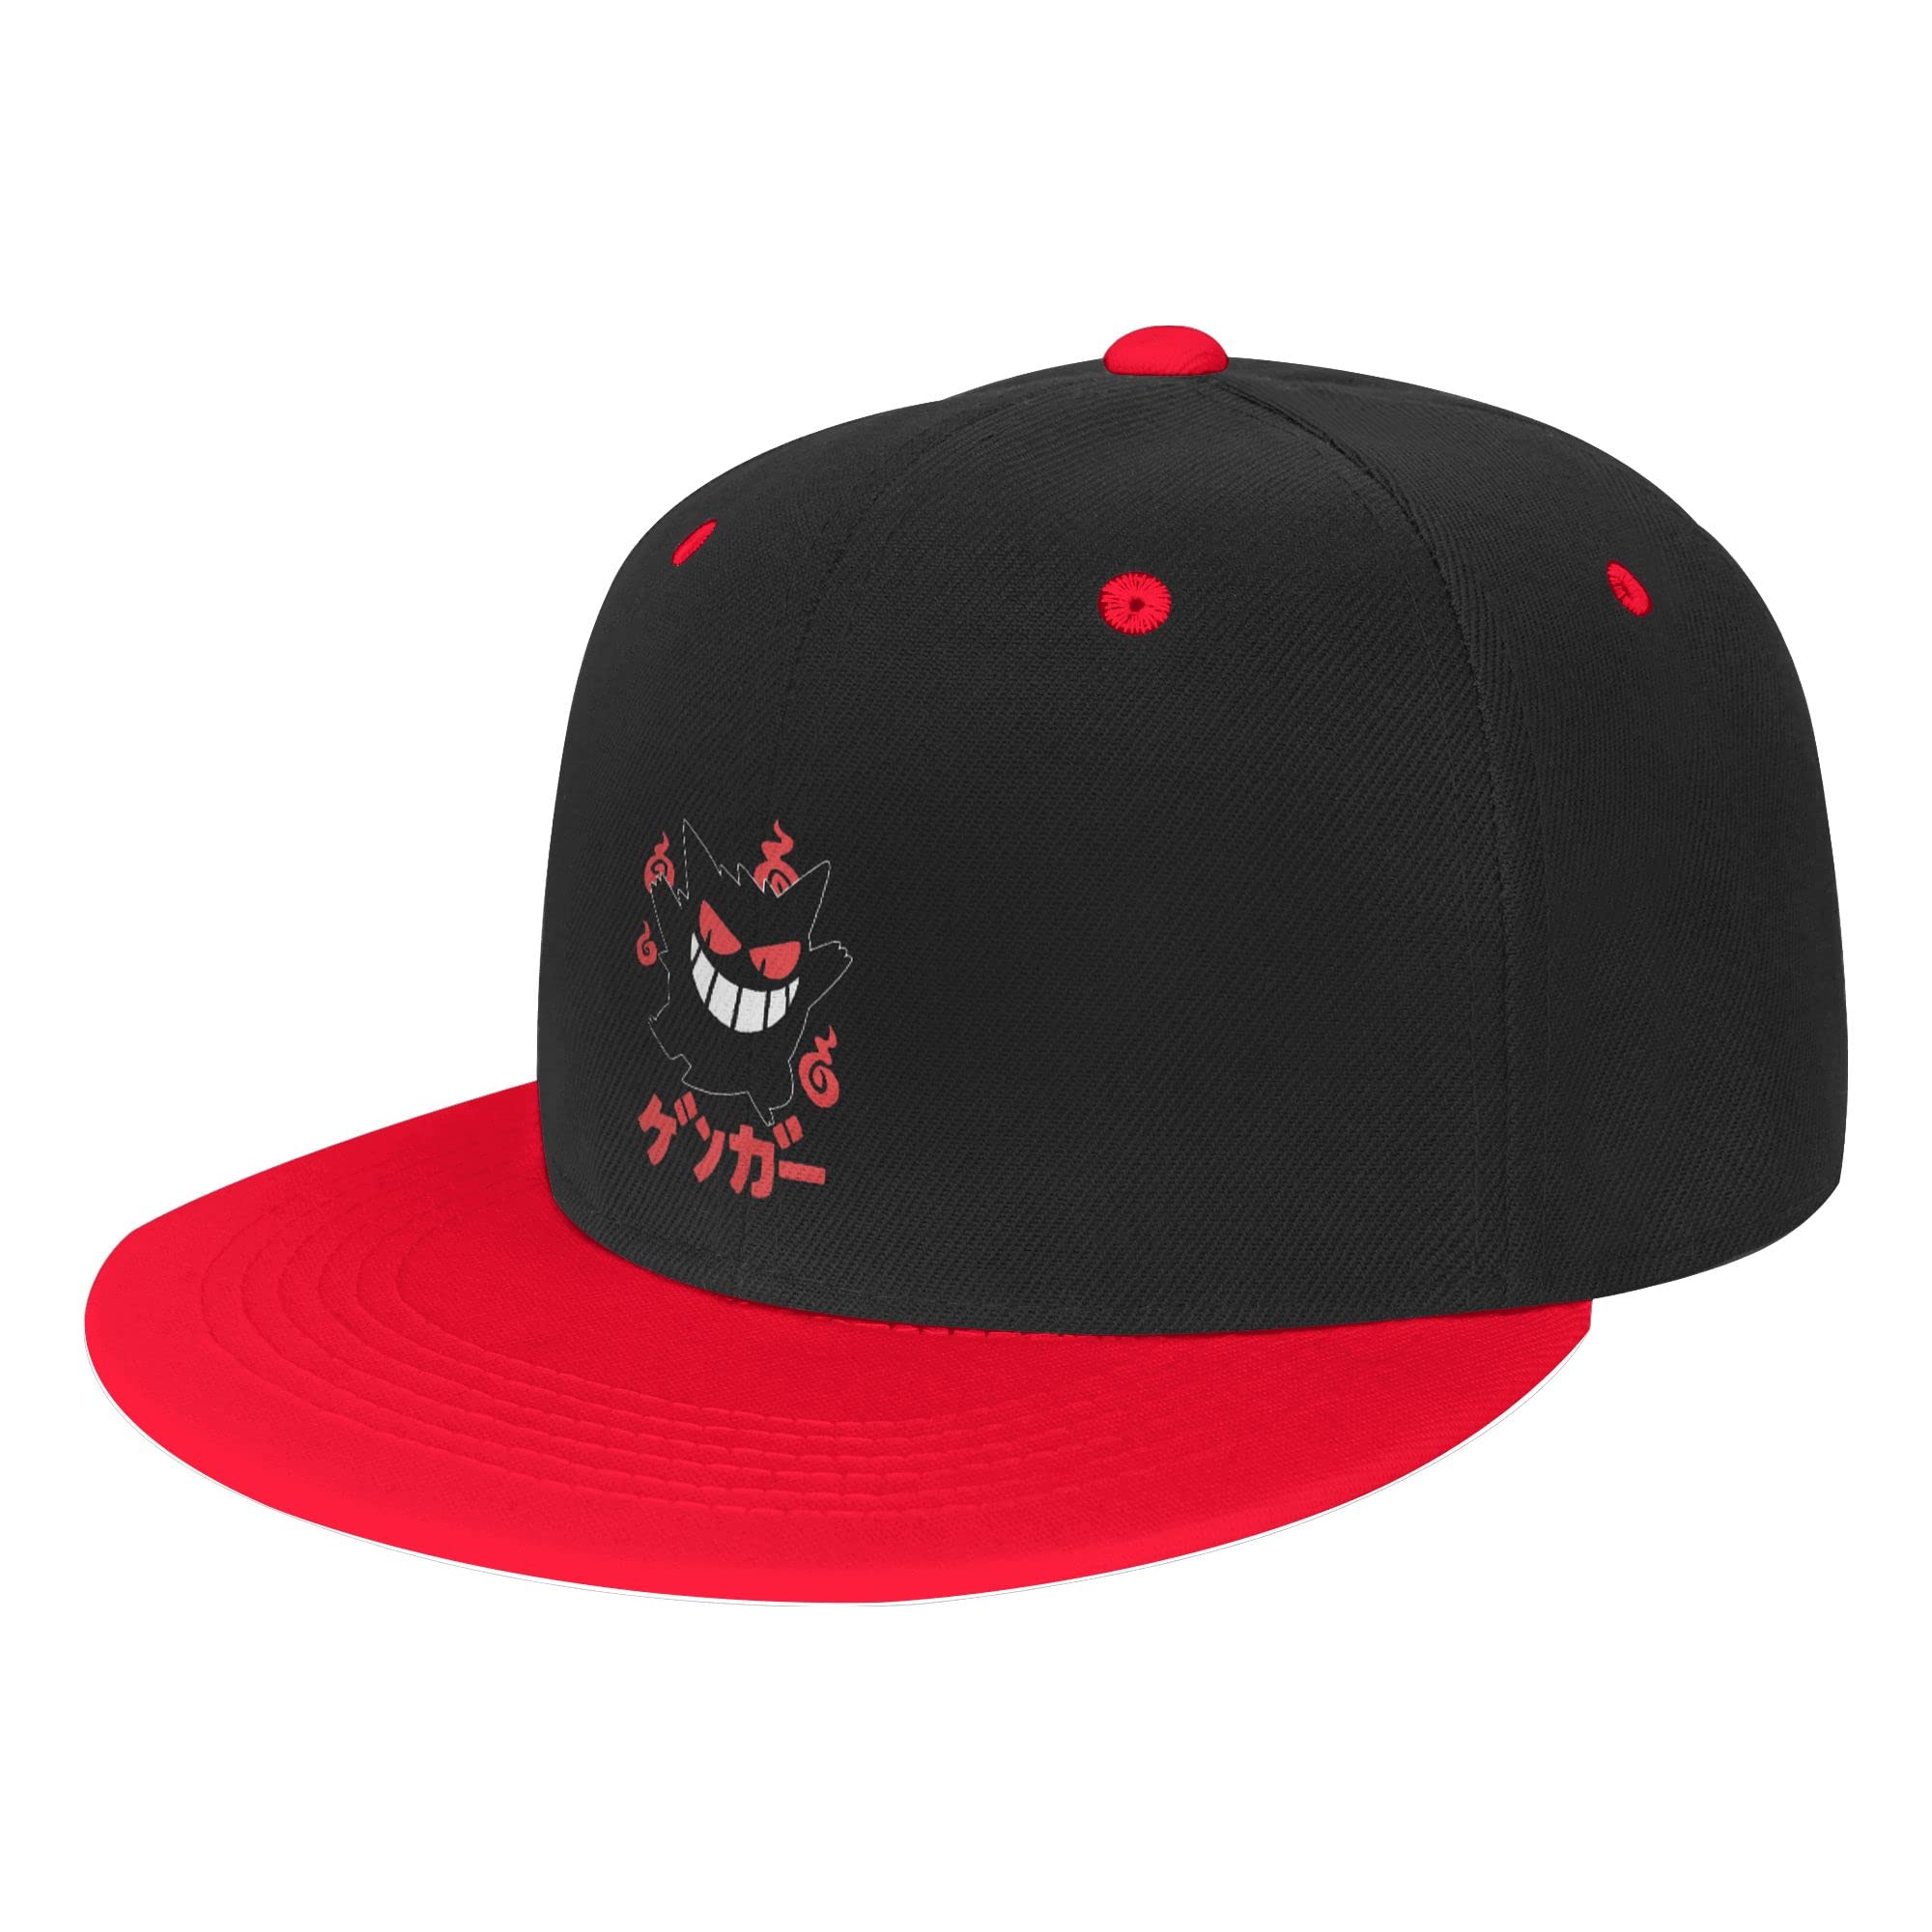 Unisex Adjustable Baseball Cap Classic Snapback Hat Hip-Hop Baseball Cap  Cool Outdoor Sun Hats for Men Women 2 One Size